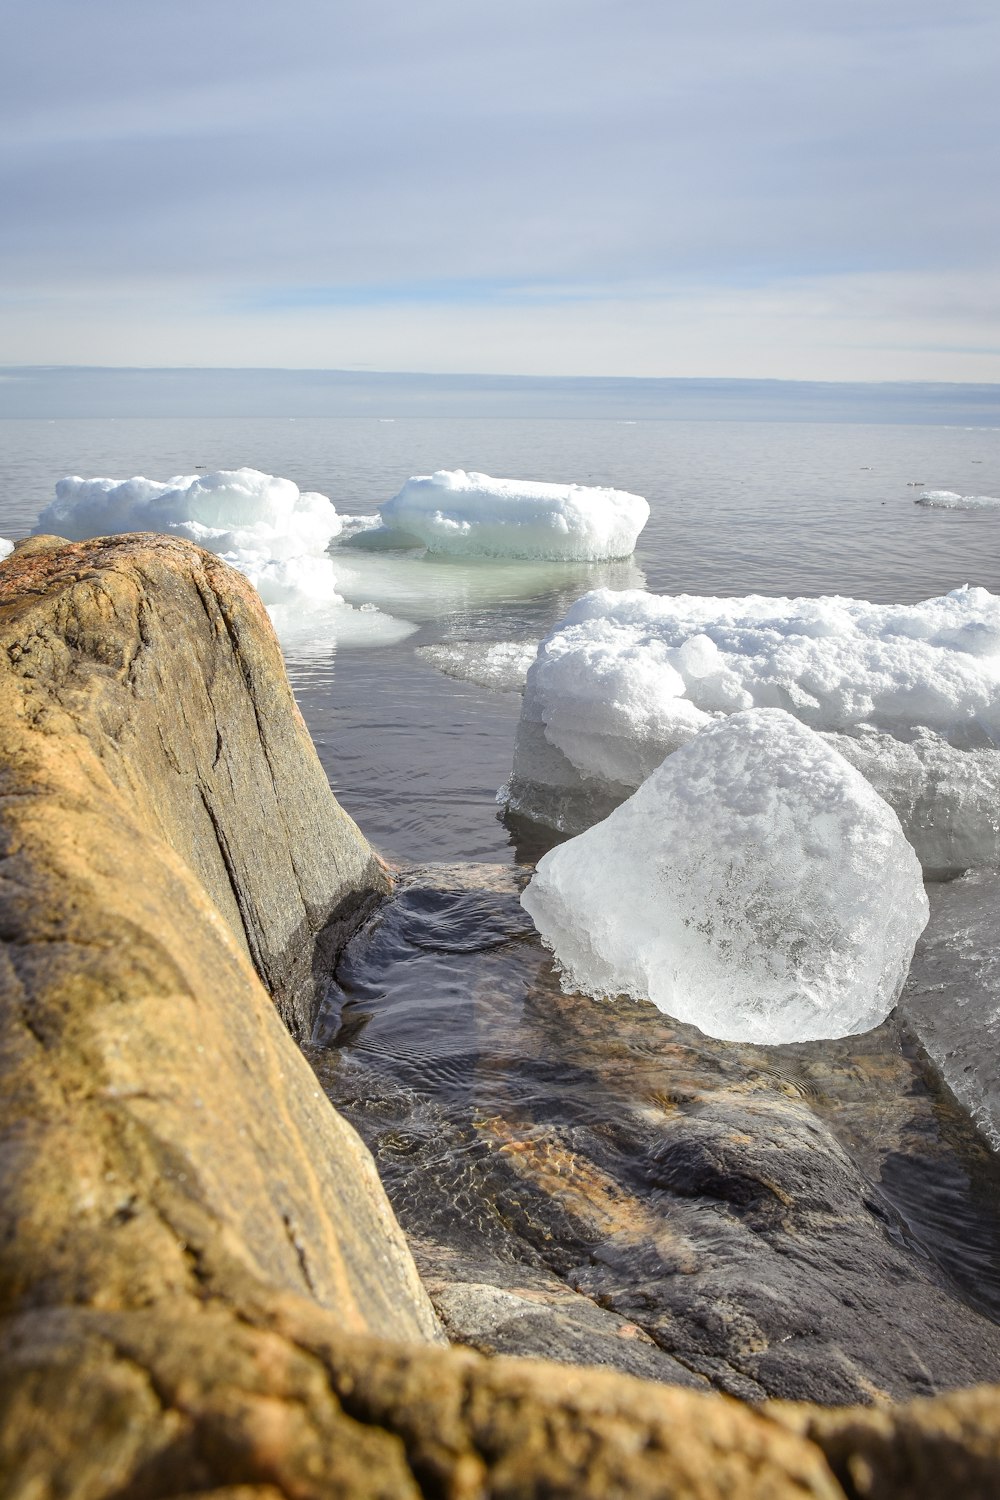 icebergs floating in a body of water near rocks